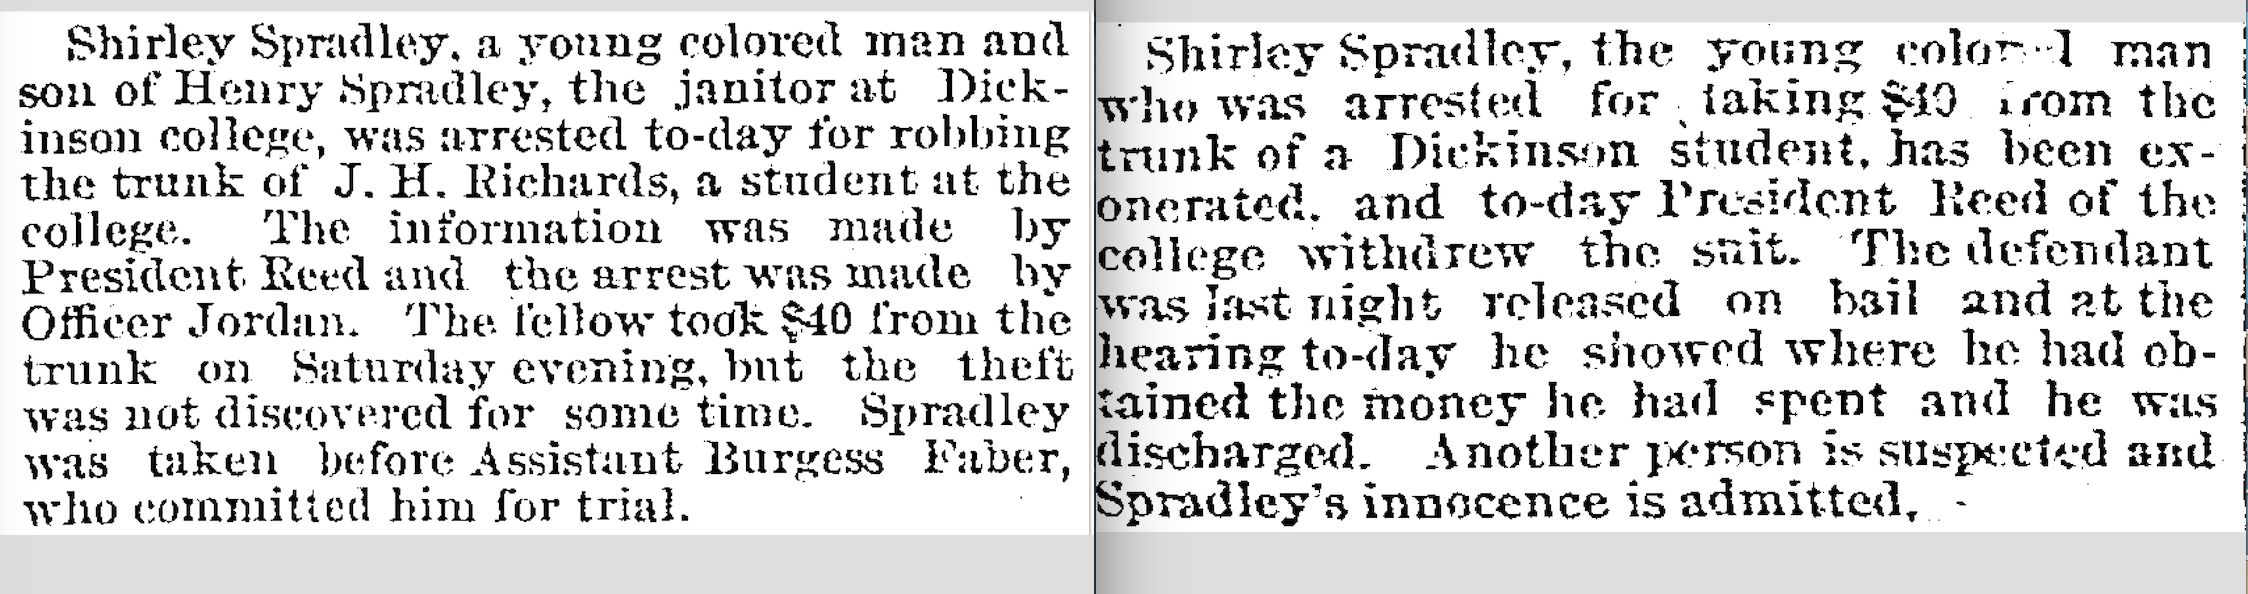 Shirley Spradley's arrest